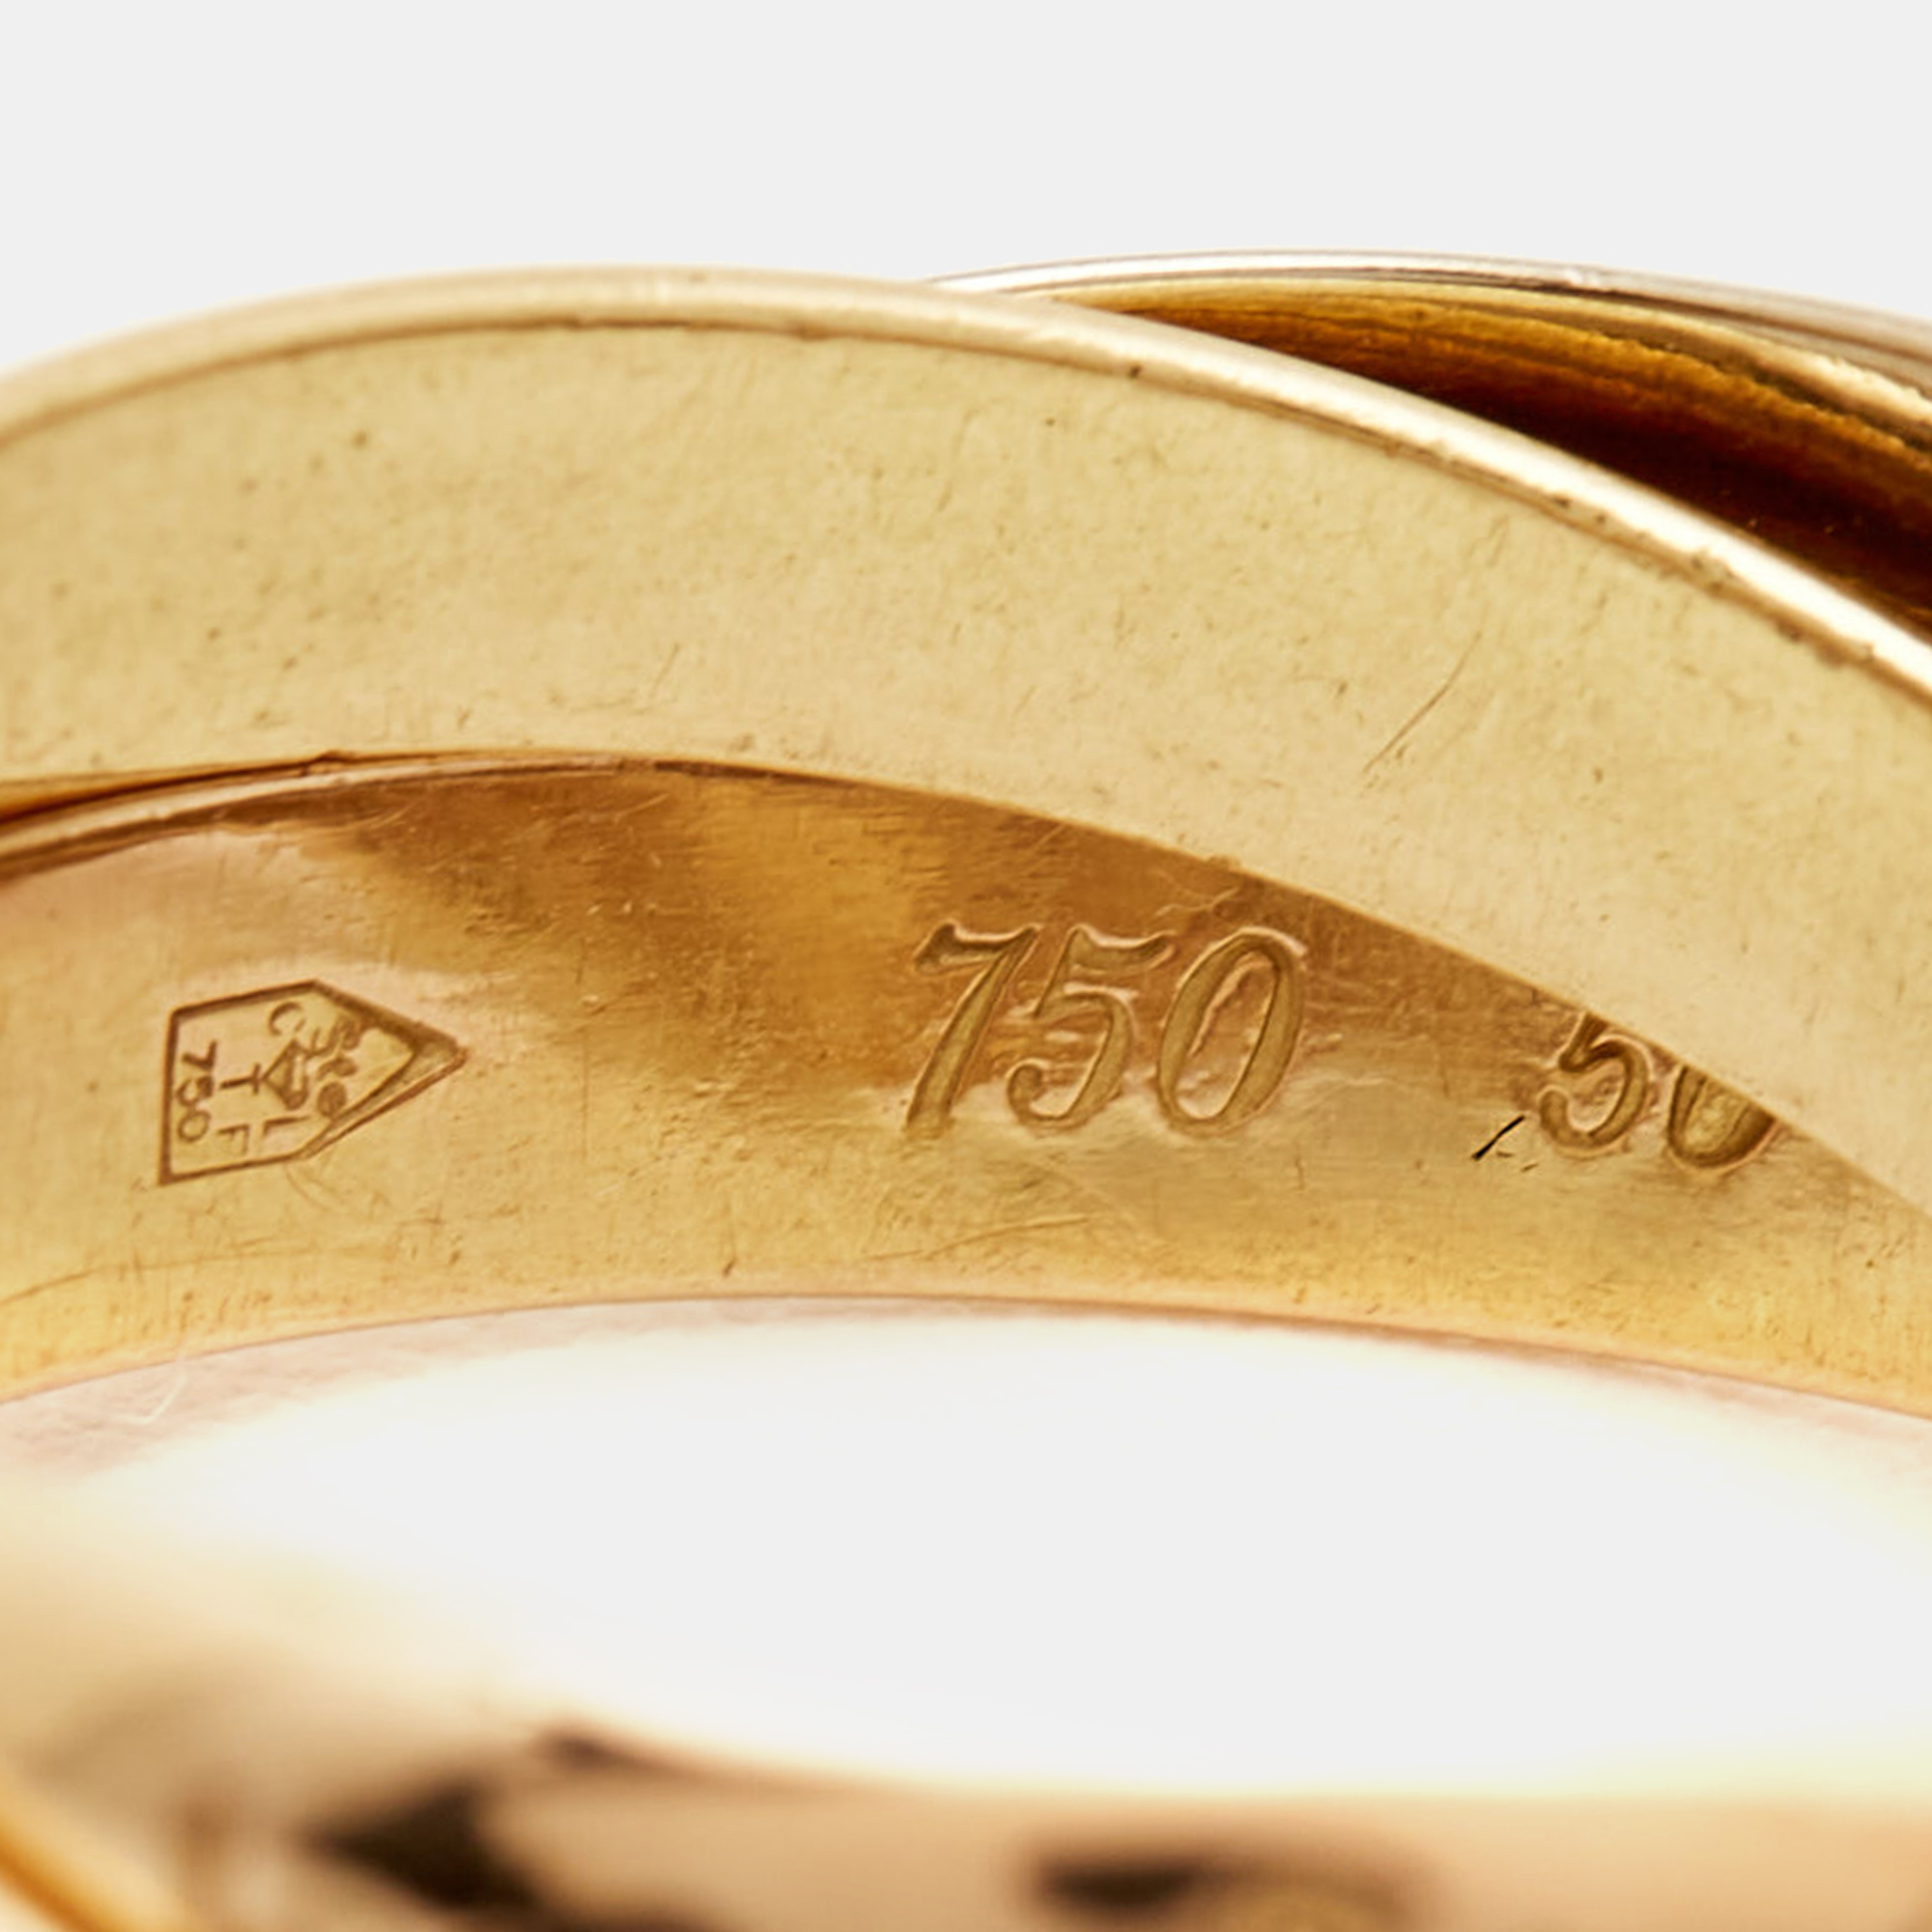 Cartier Les Must De Cartier 18K Three Tone Gold Ring 50